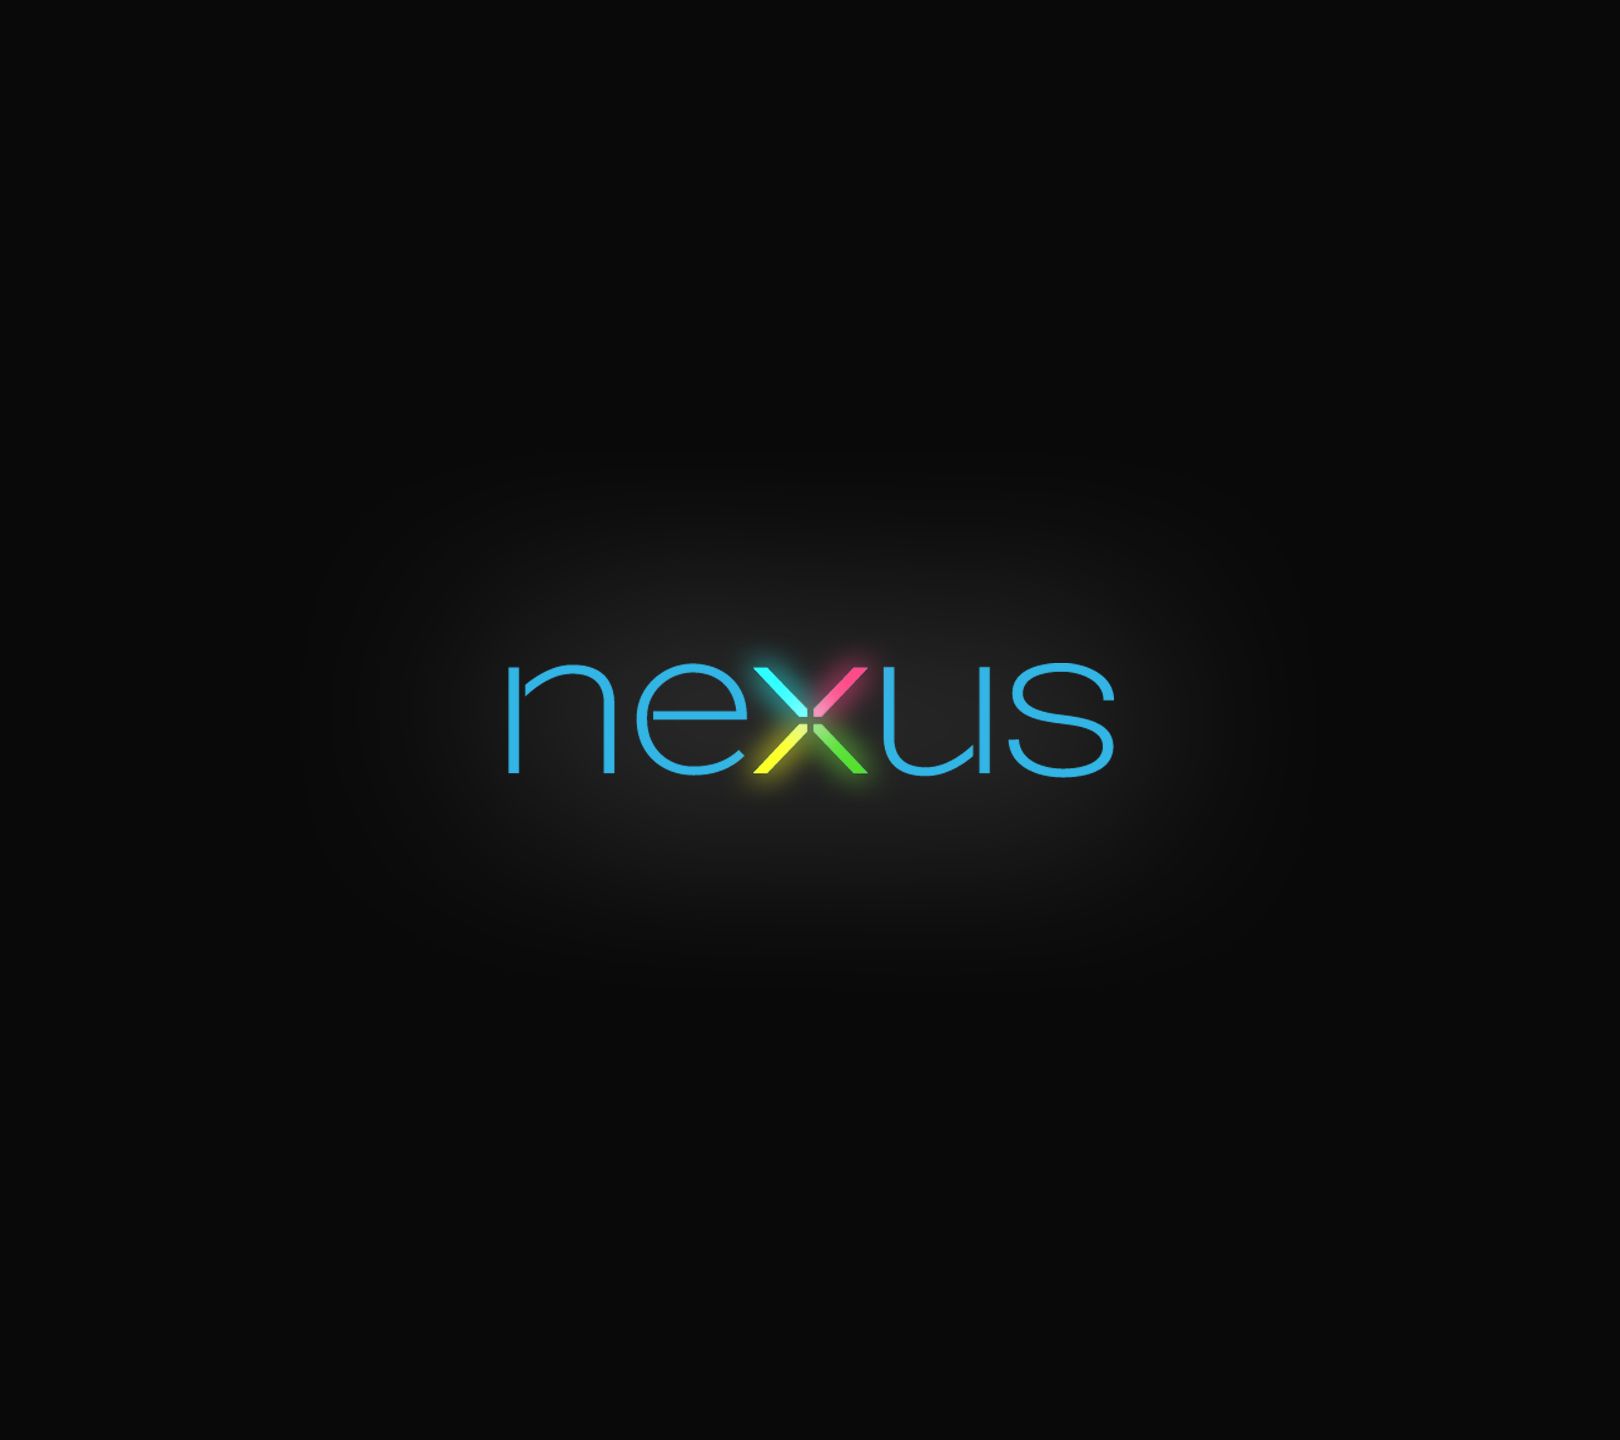 Nexus Android HD Wallpaper Desktop #6283 Wallpaper | ForWallpapers.com